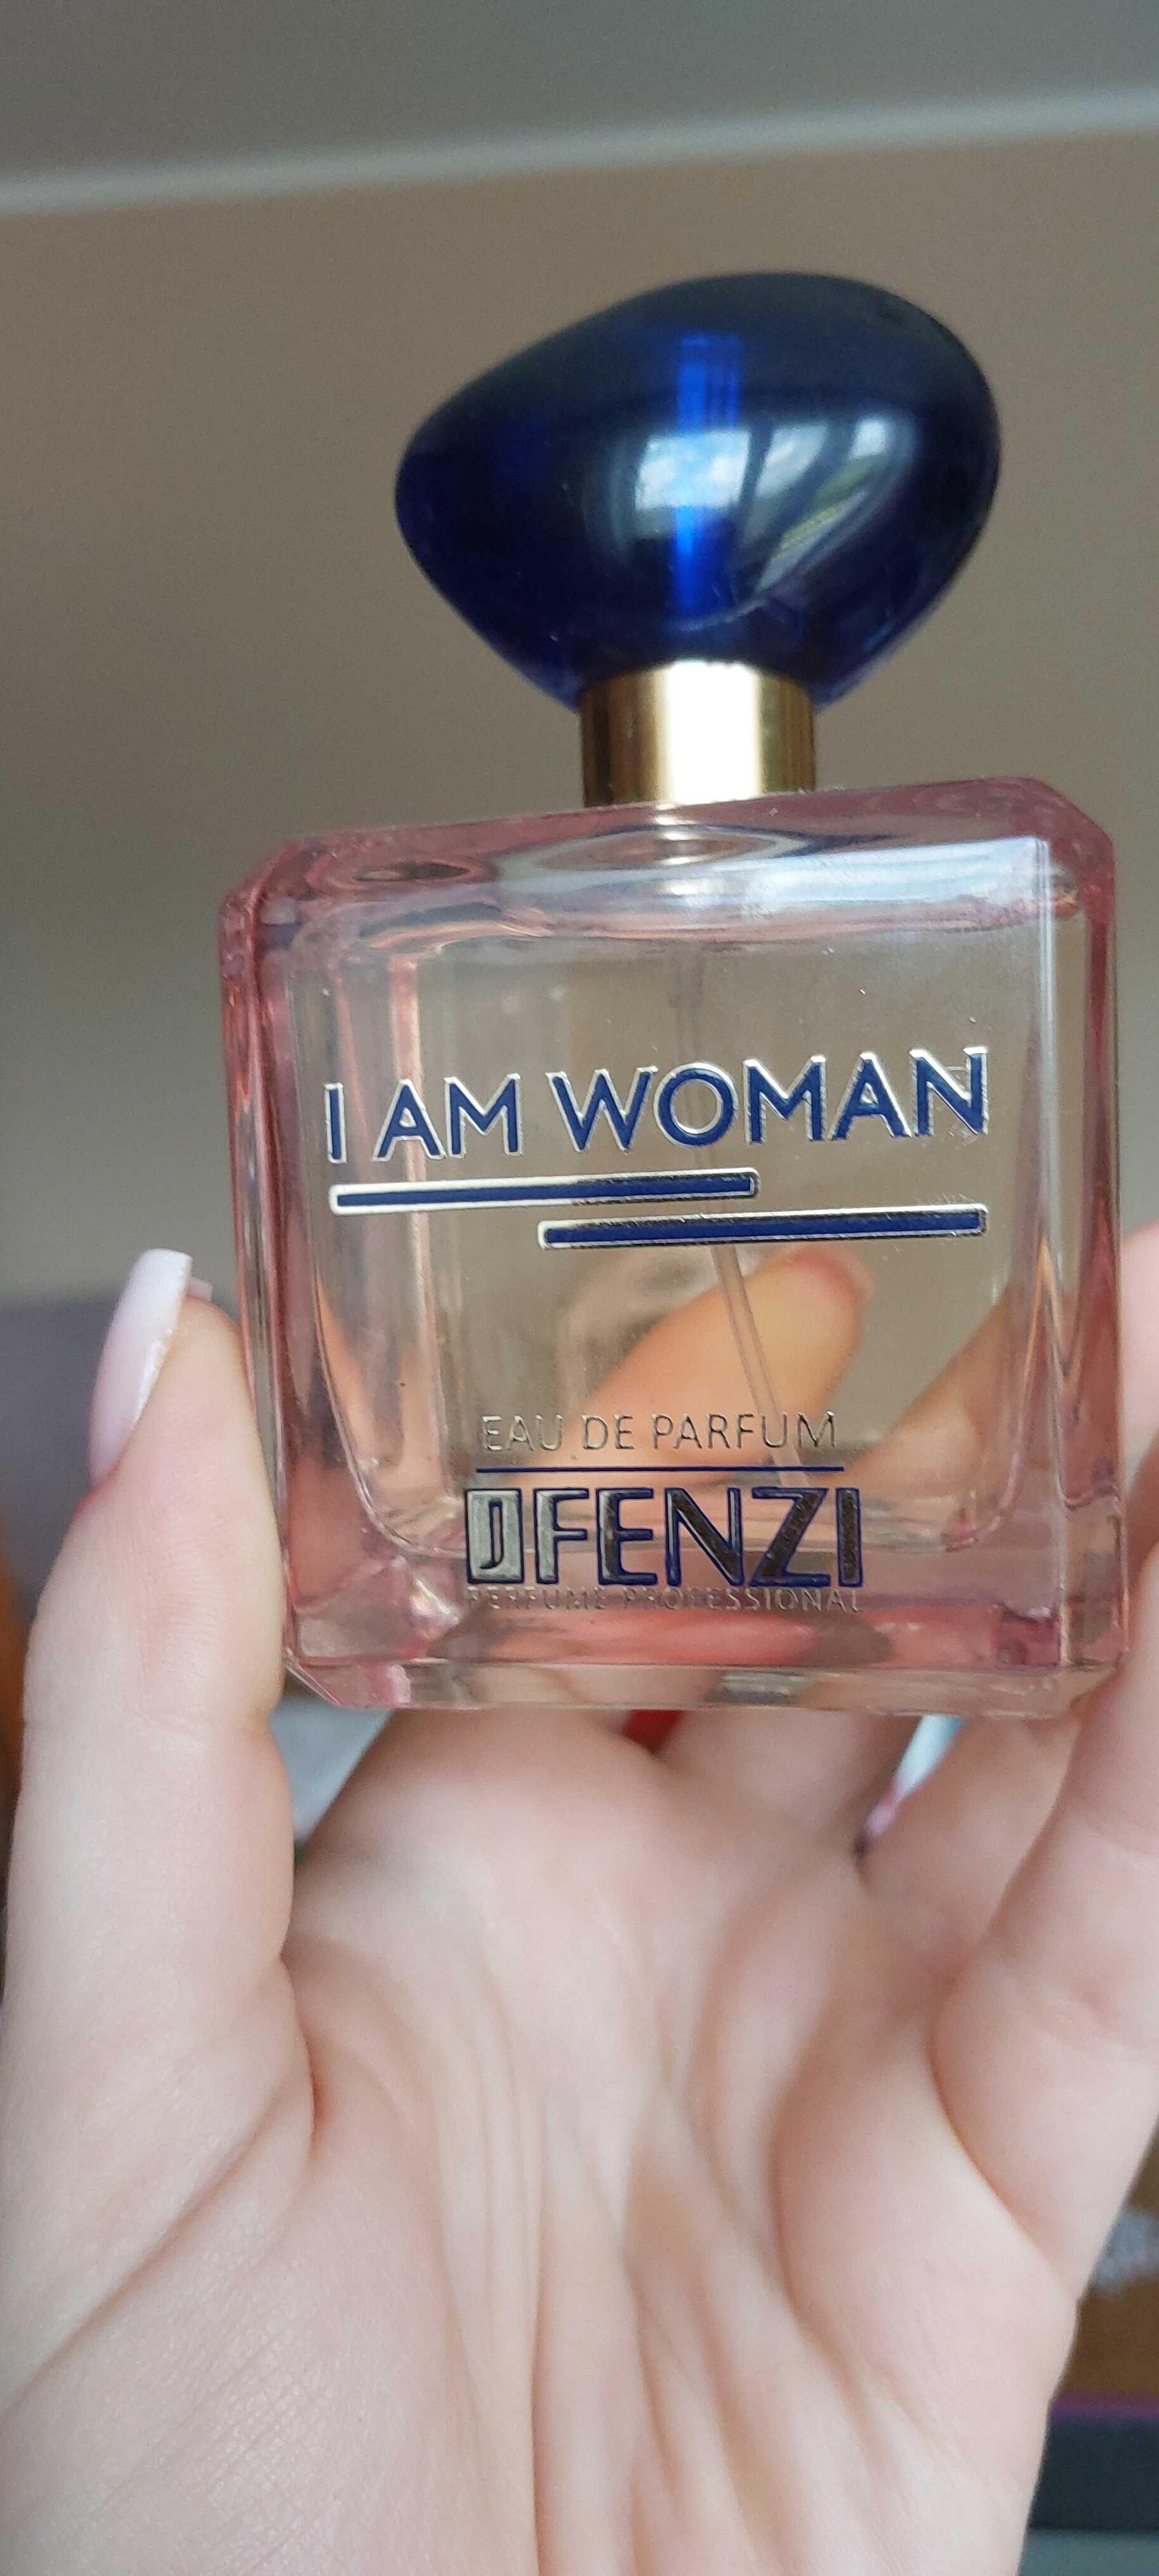 Perfumy "I AM WOMEN" jfenzi